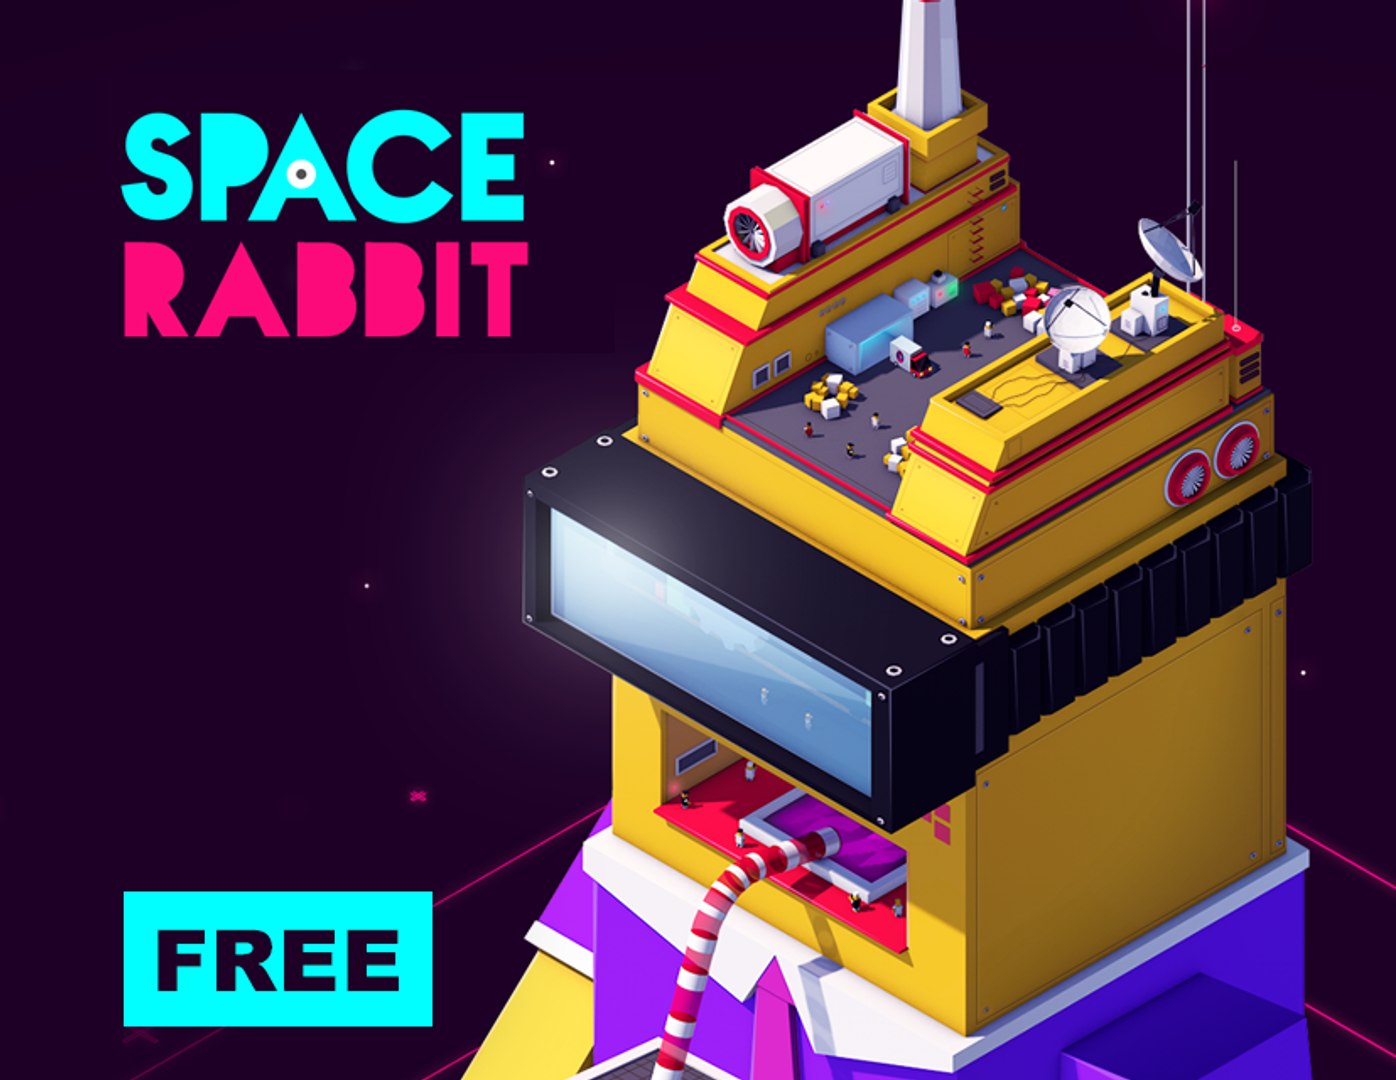 Free 3d Space Rabbit Model Turbosquid 1165434